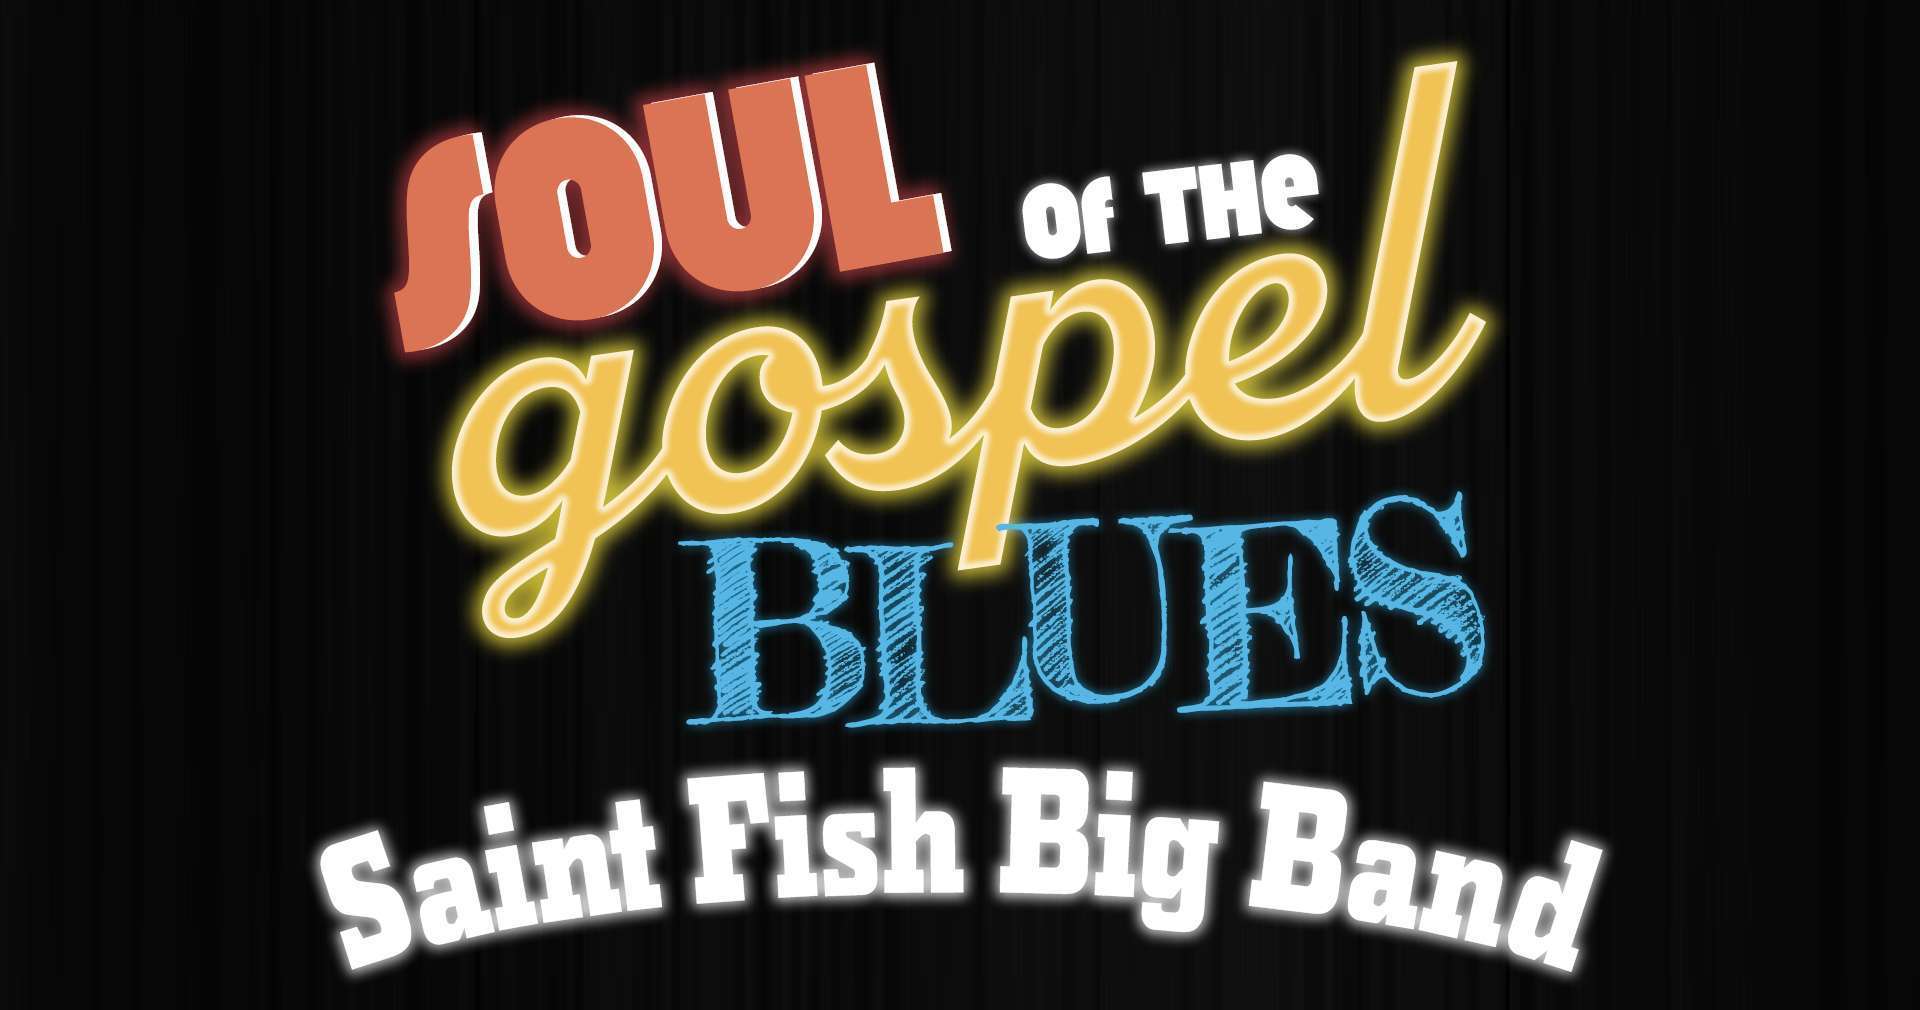 Saint Fish Big Band - Soul of the Gospel Blues